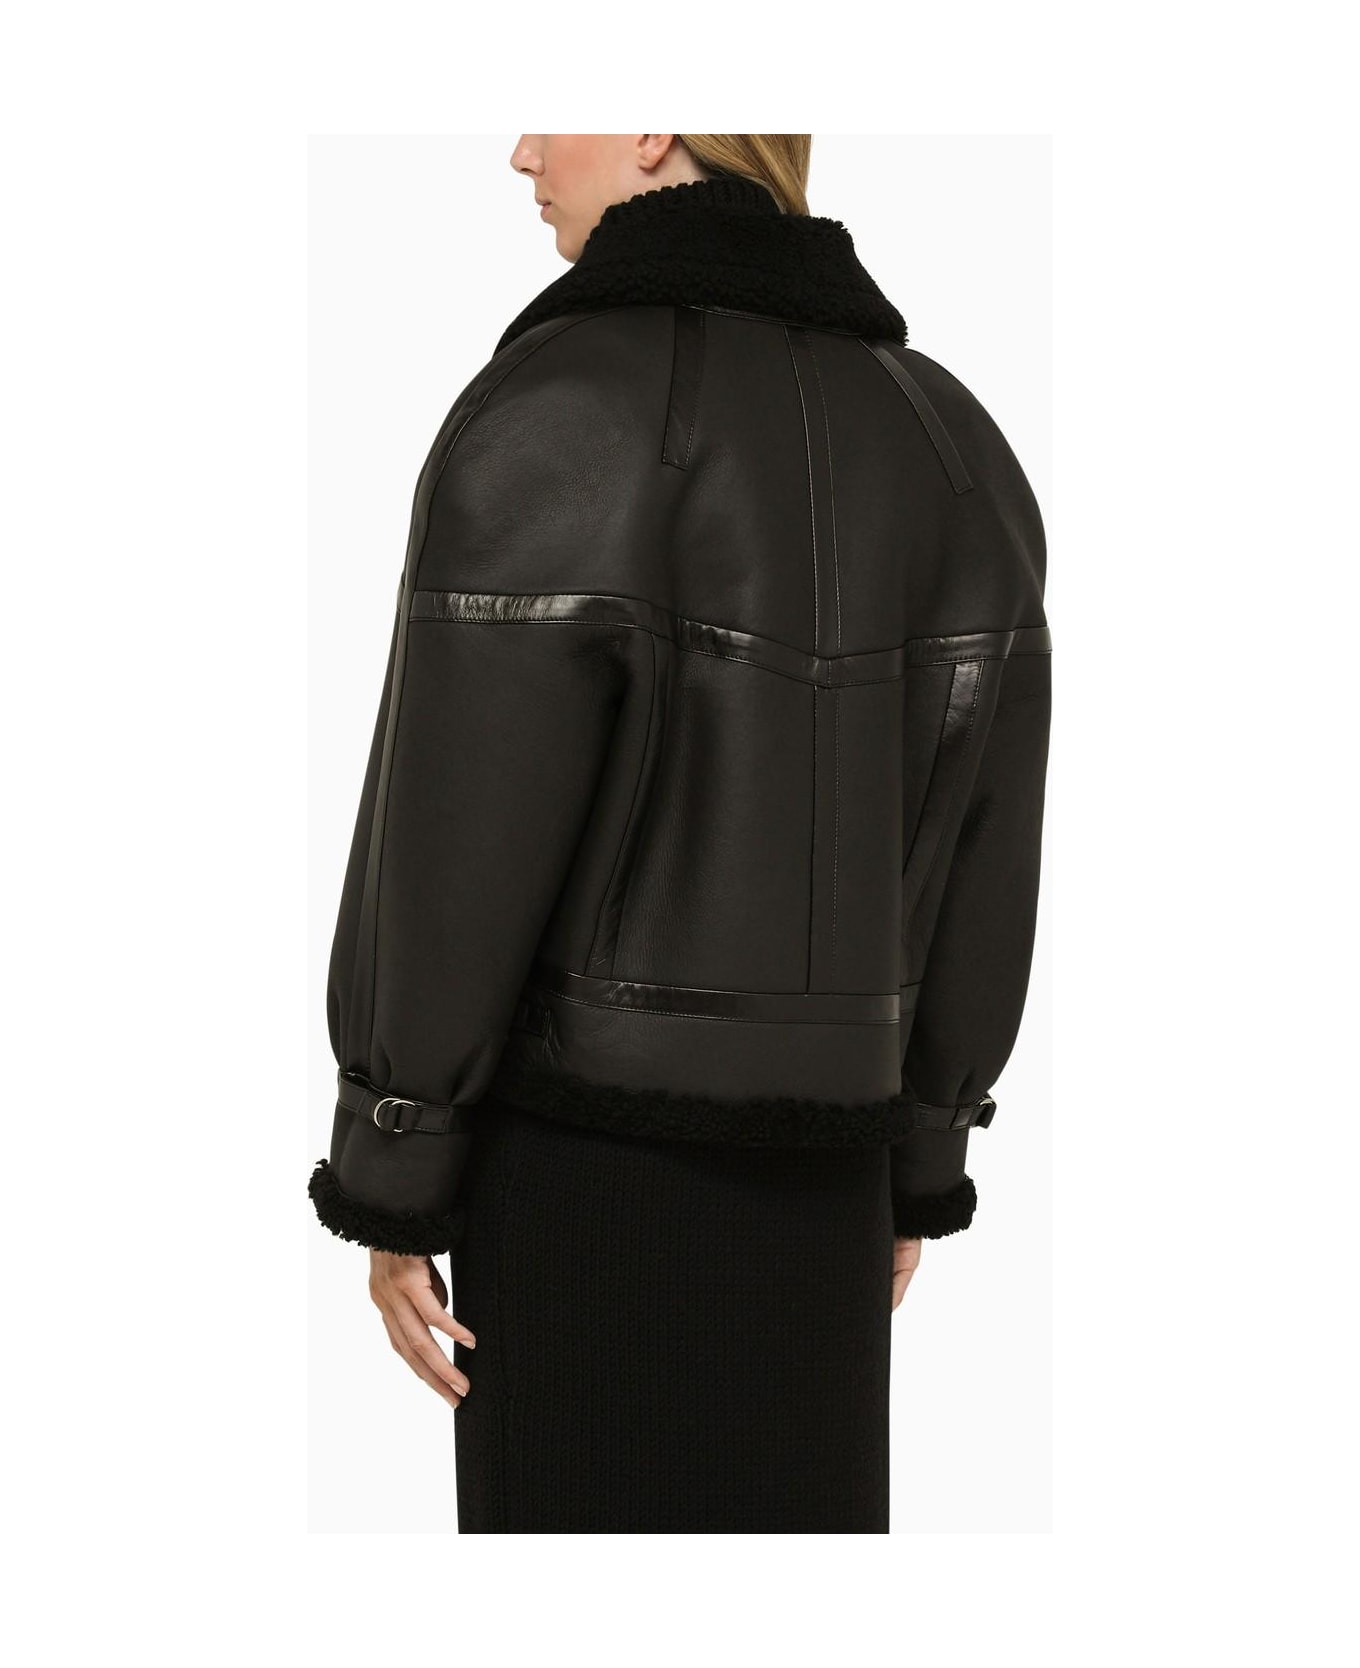 Saint Laurent Black Leather Jacket - Black